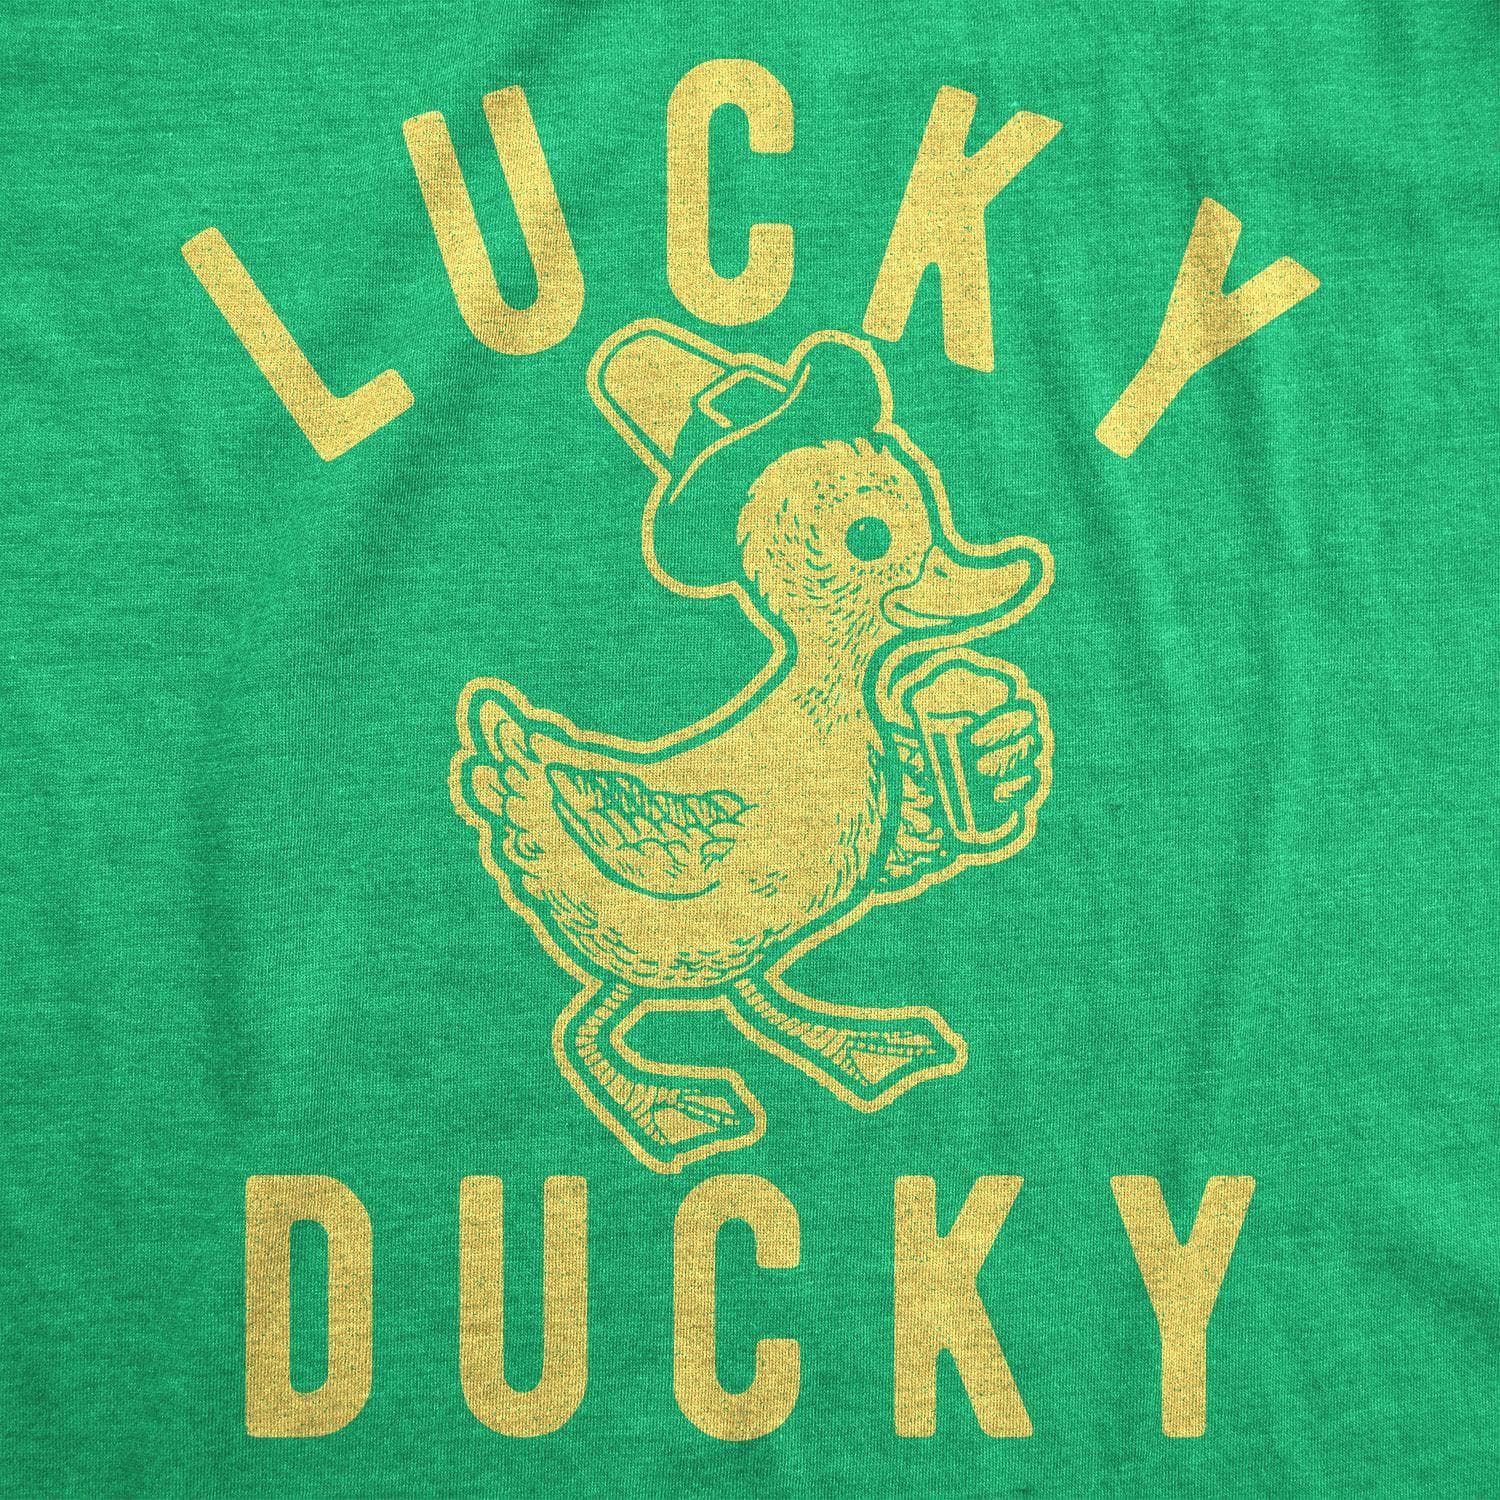 Lucky Ducky Men's Tshirt  -  Crazy Dog T-Shirts